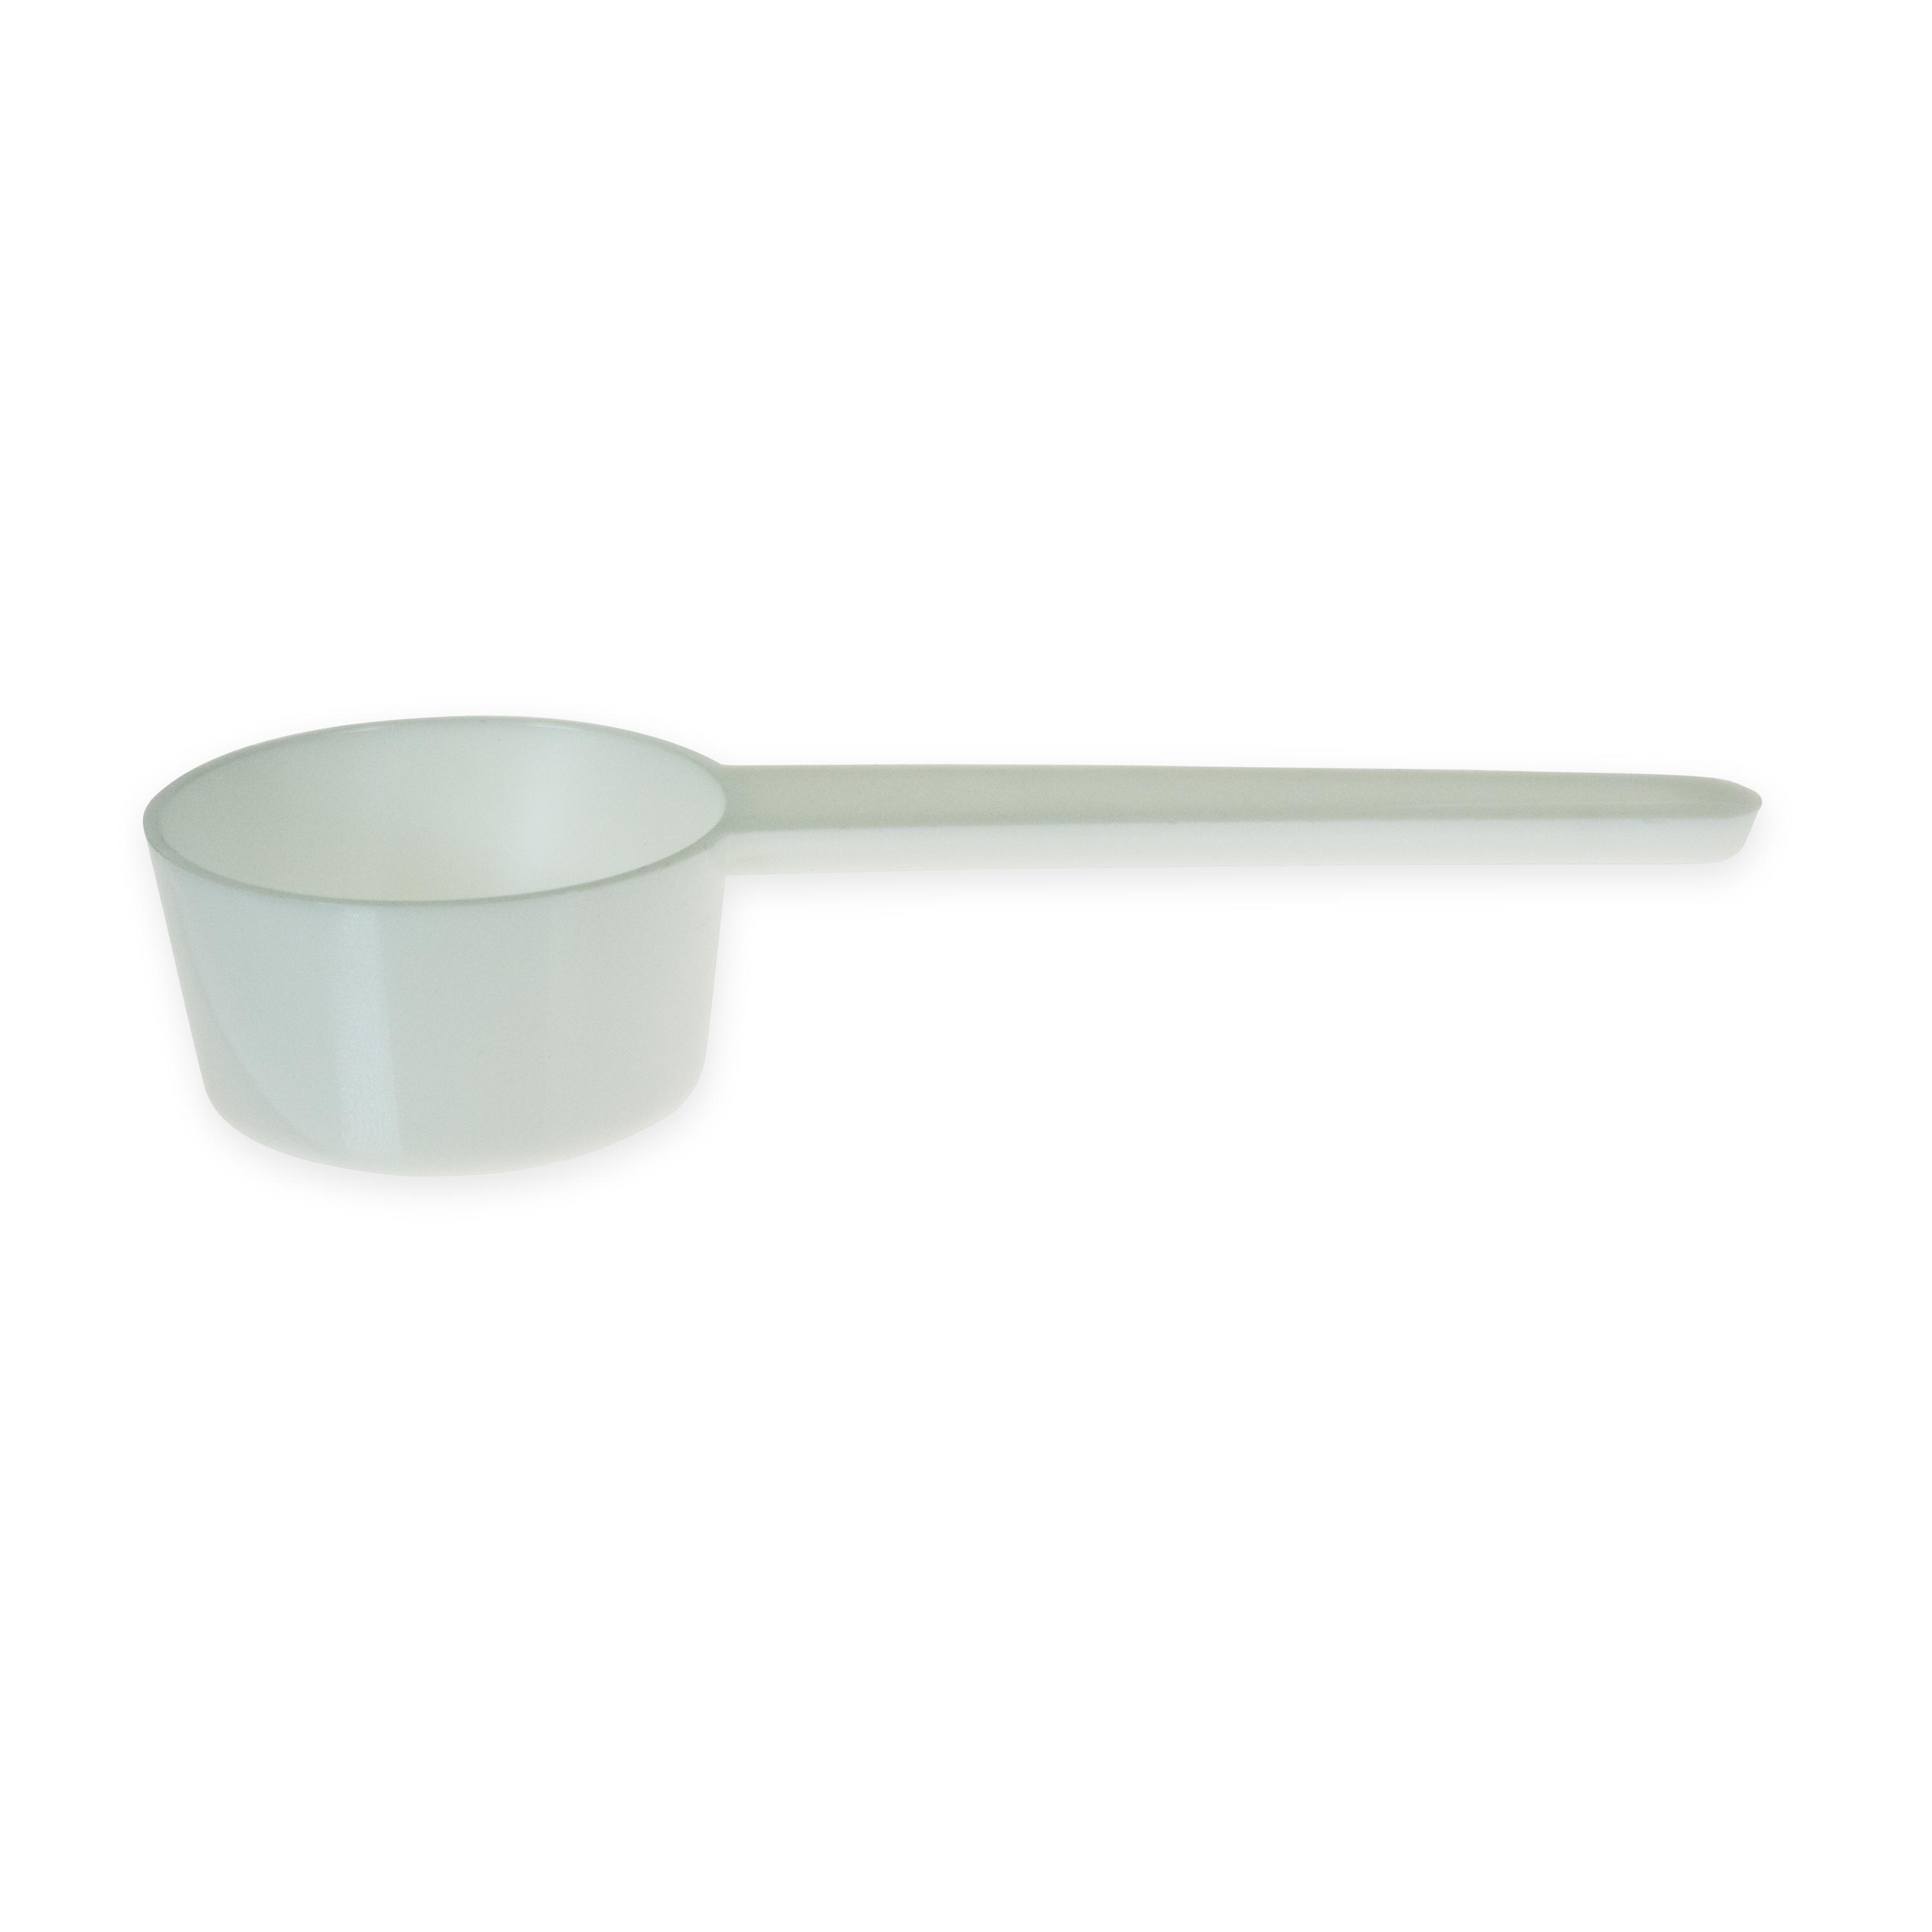 Measuring spoon 10 ml white Arboblend®